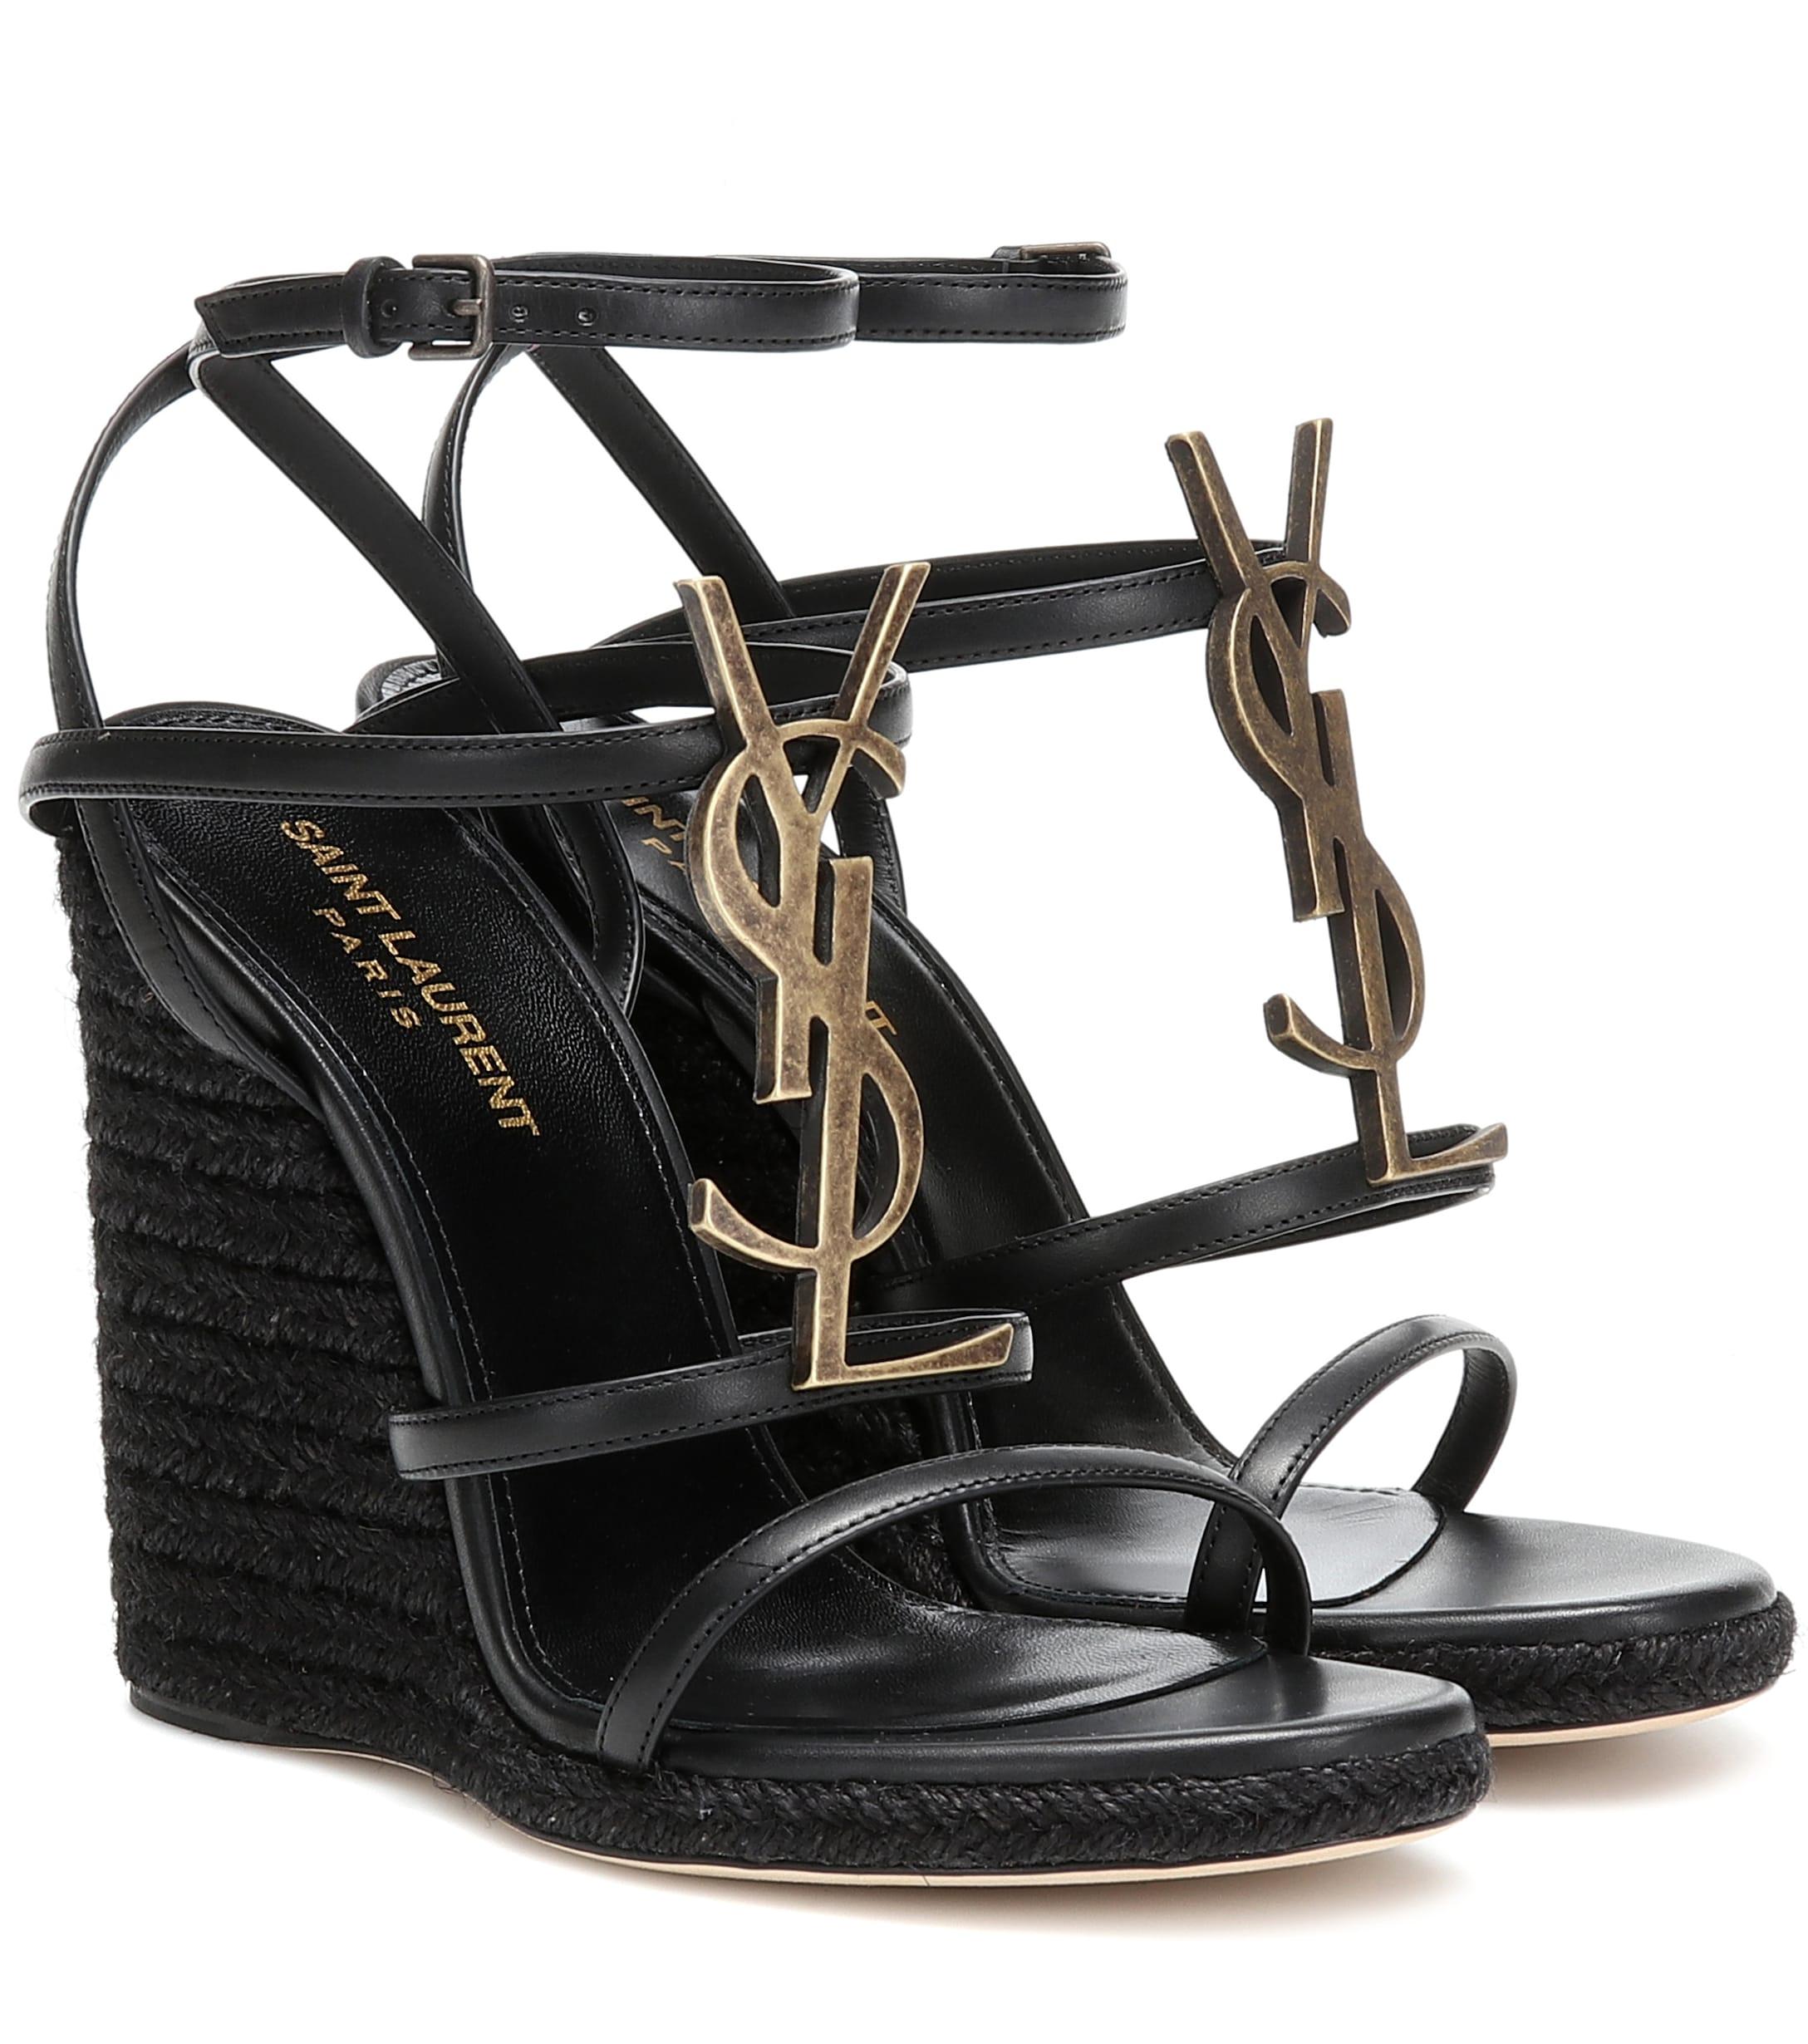 Saint Laurent Cassandra Leather Wedge Espadrille Sandals in Black - Lyst